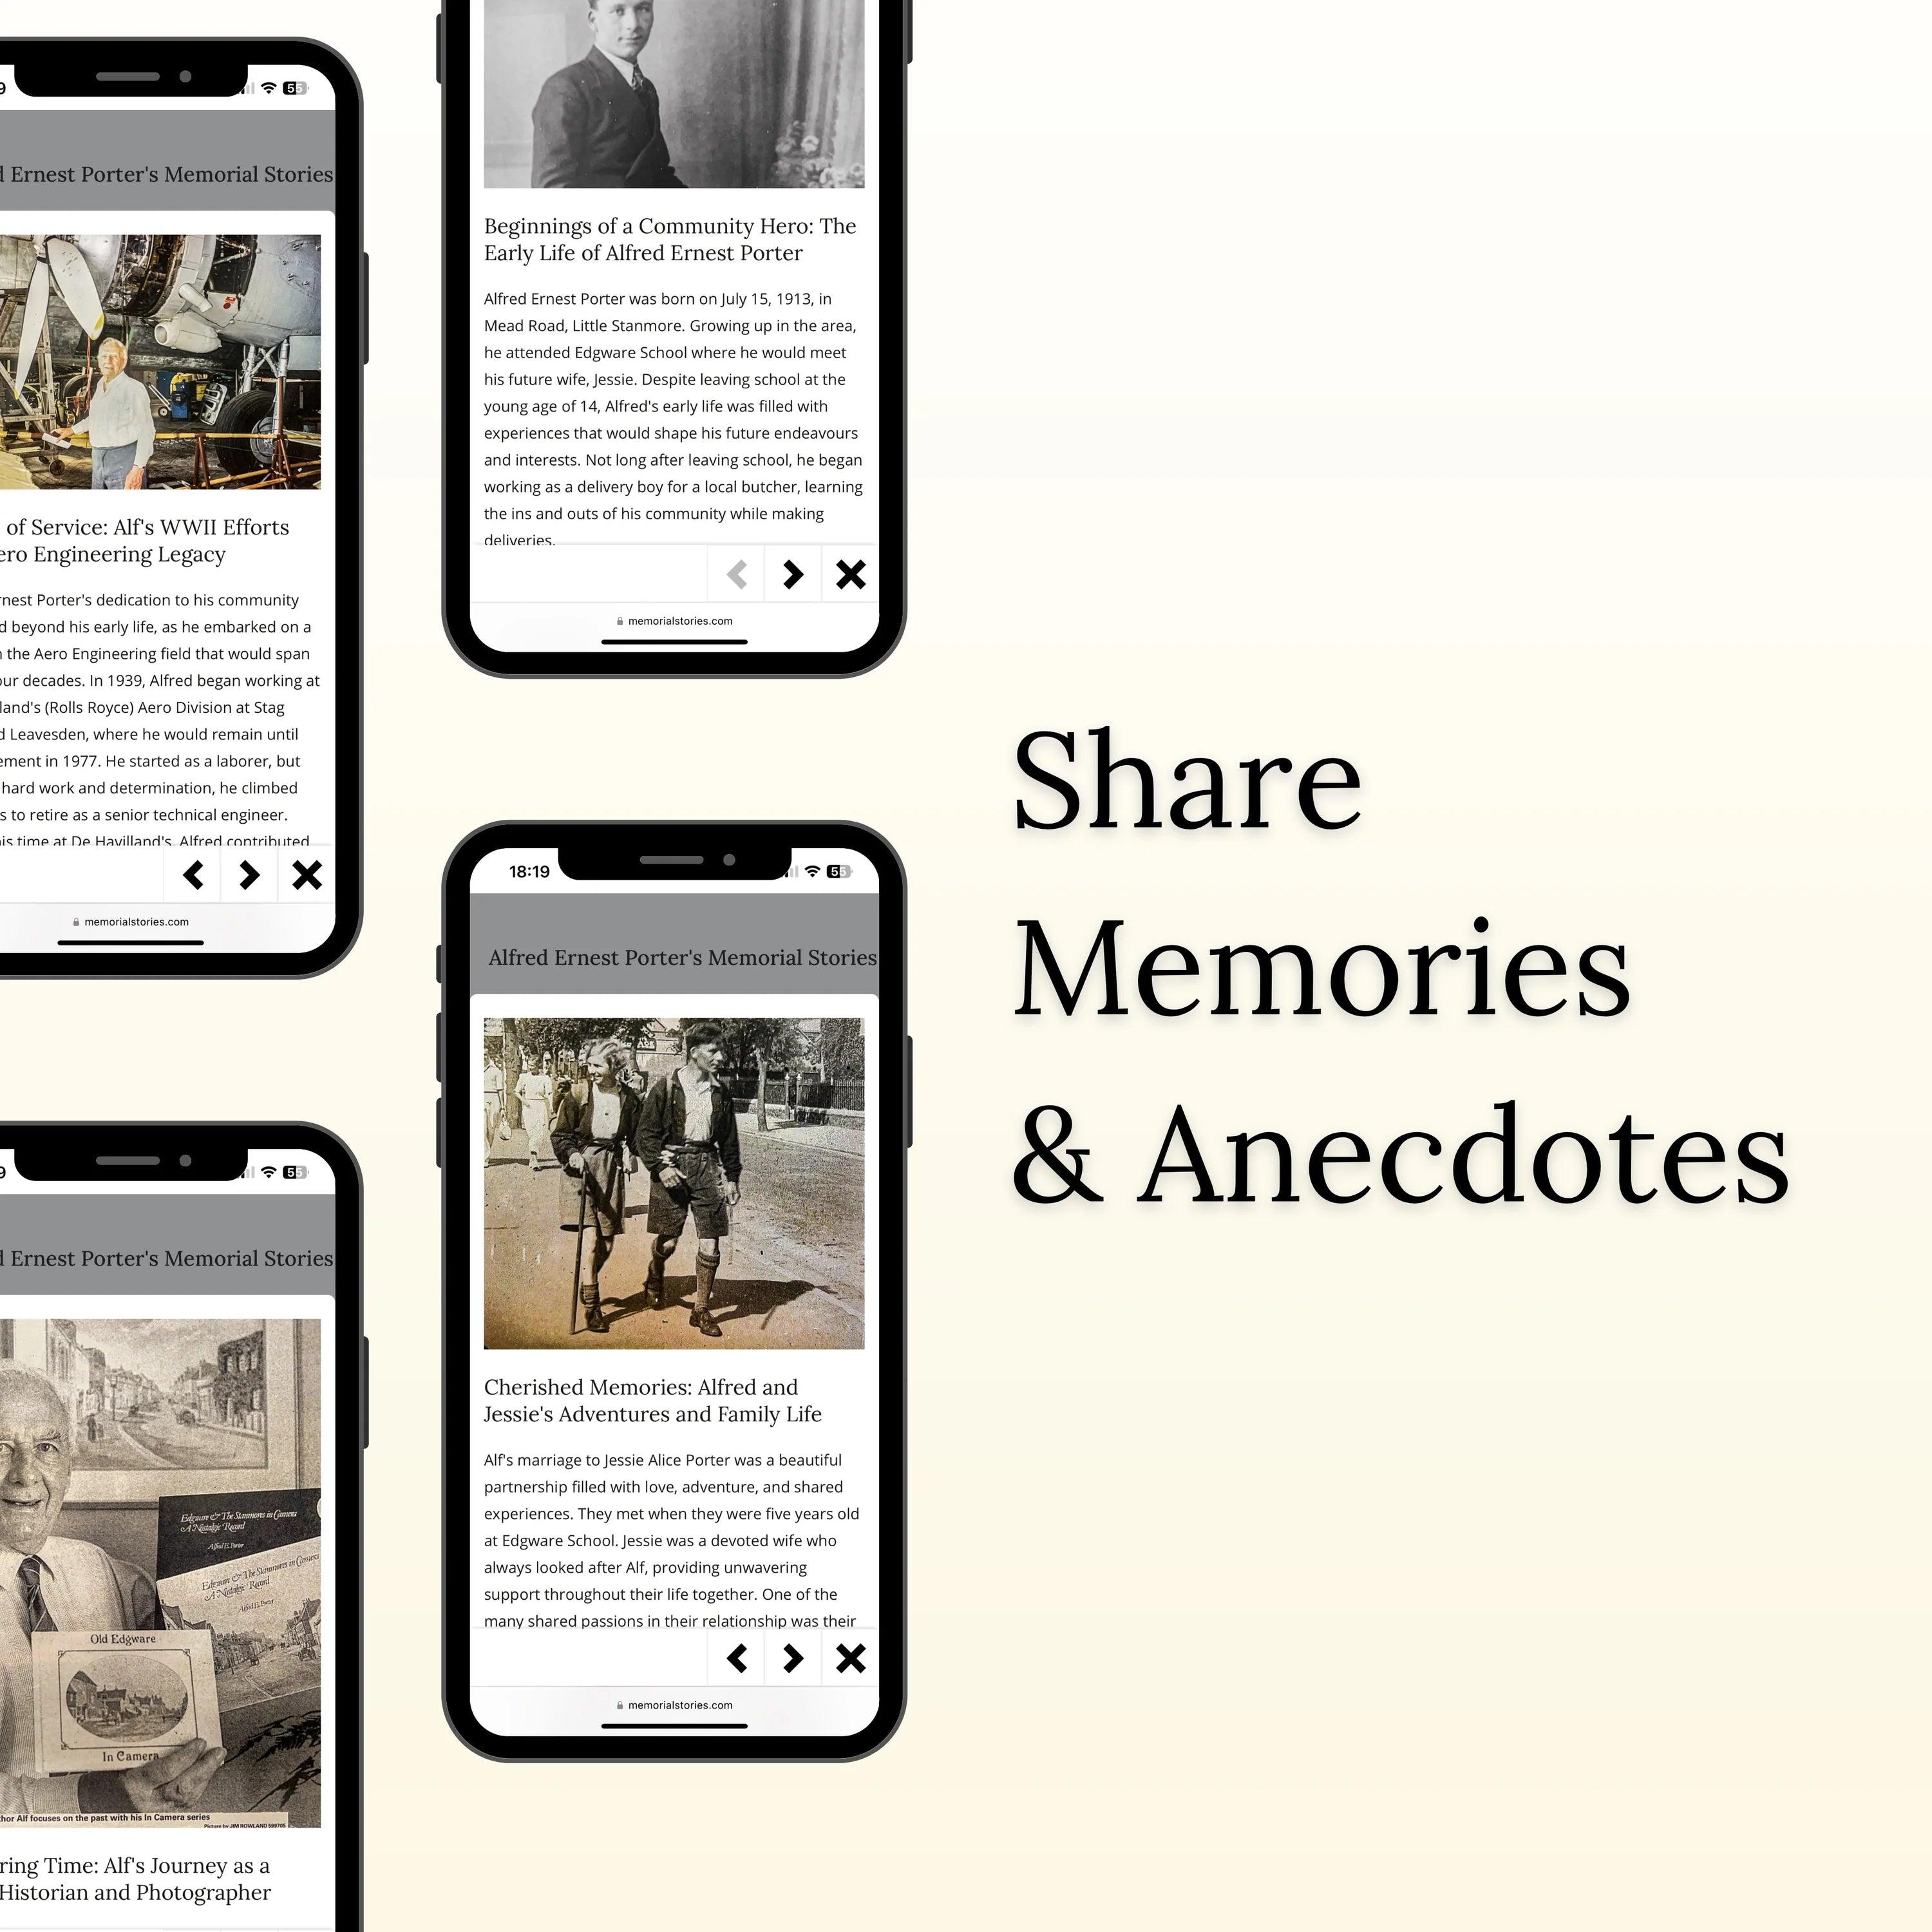 The Memorial Story Plaque - Memorial Stories - QR Code Memorial Plaques